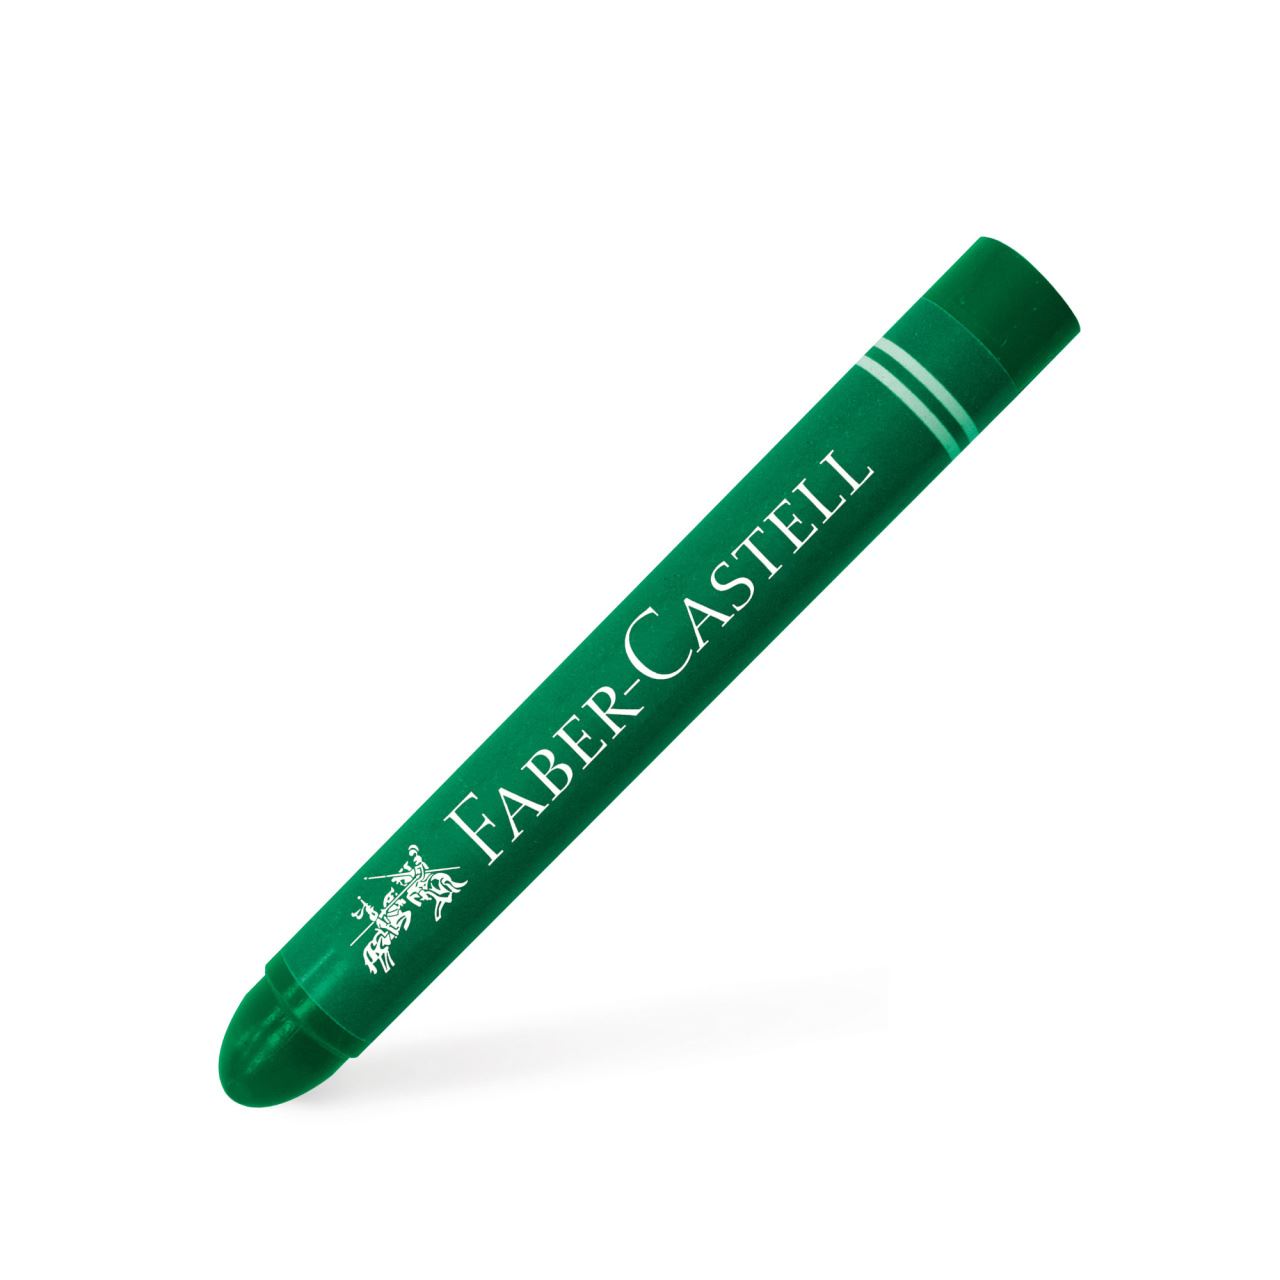 Faber-Castell - Wax Crayon Jumbo 12x